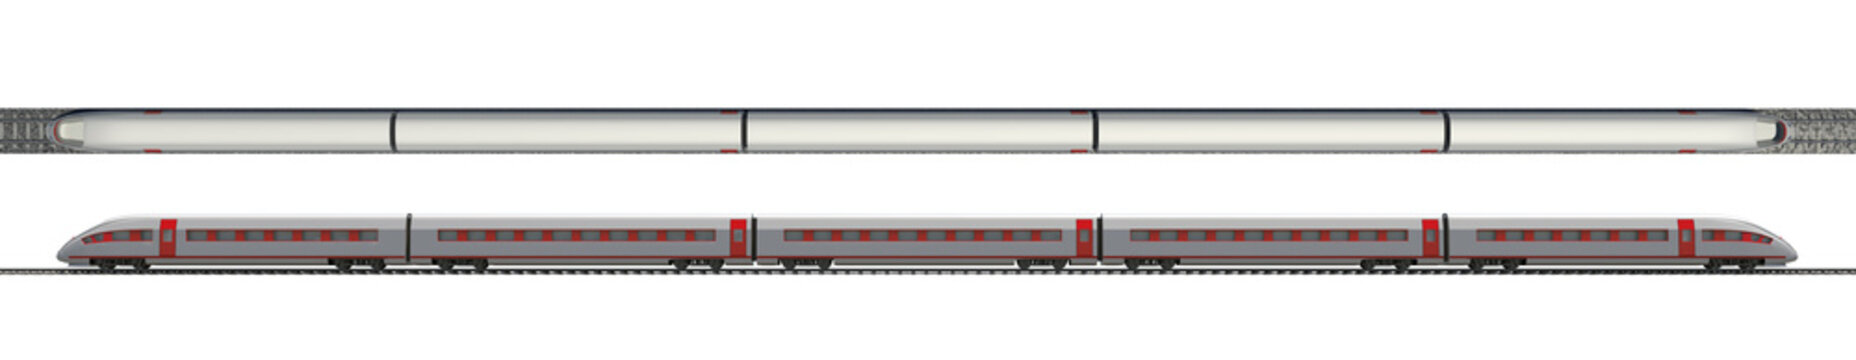 Fototapeta Long train on white, top and side views